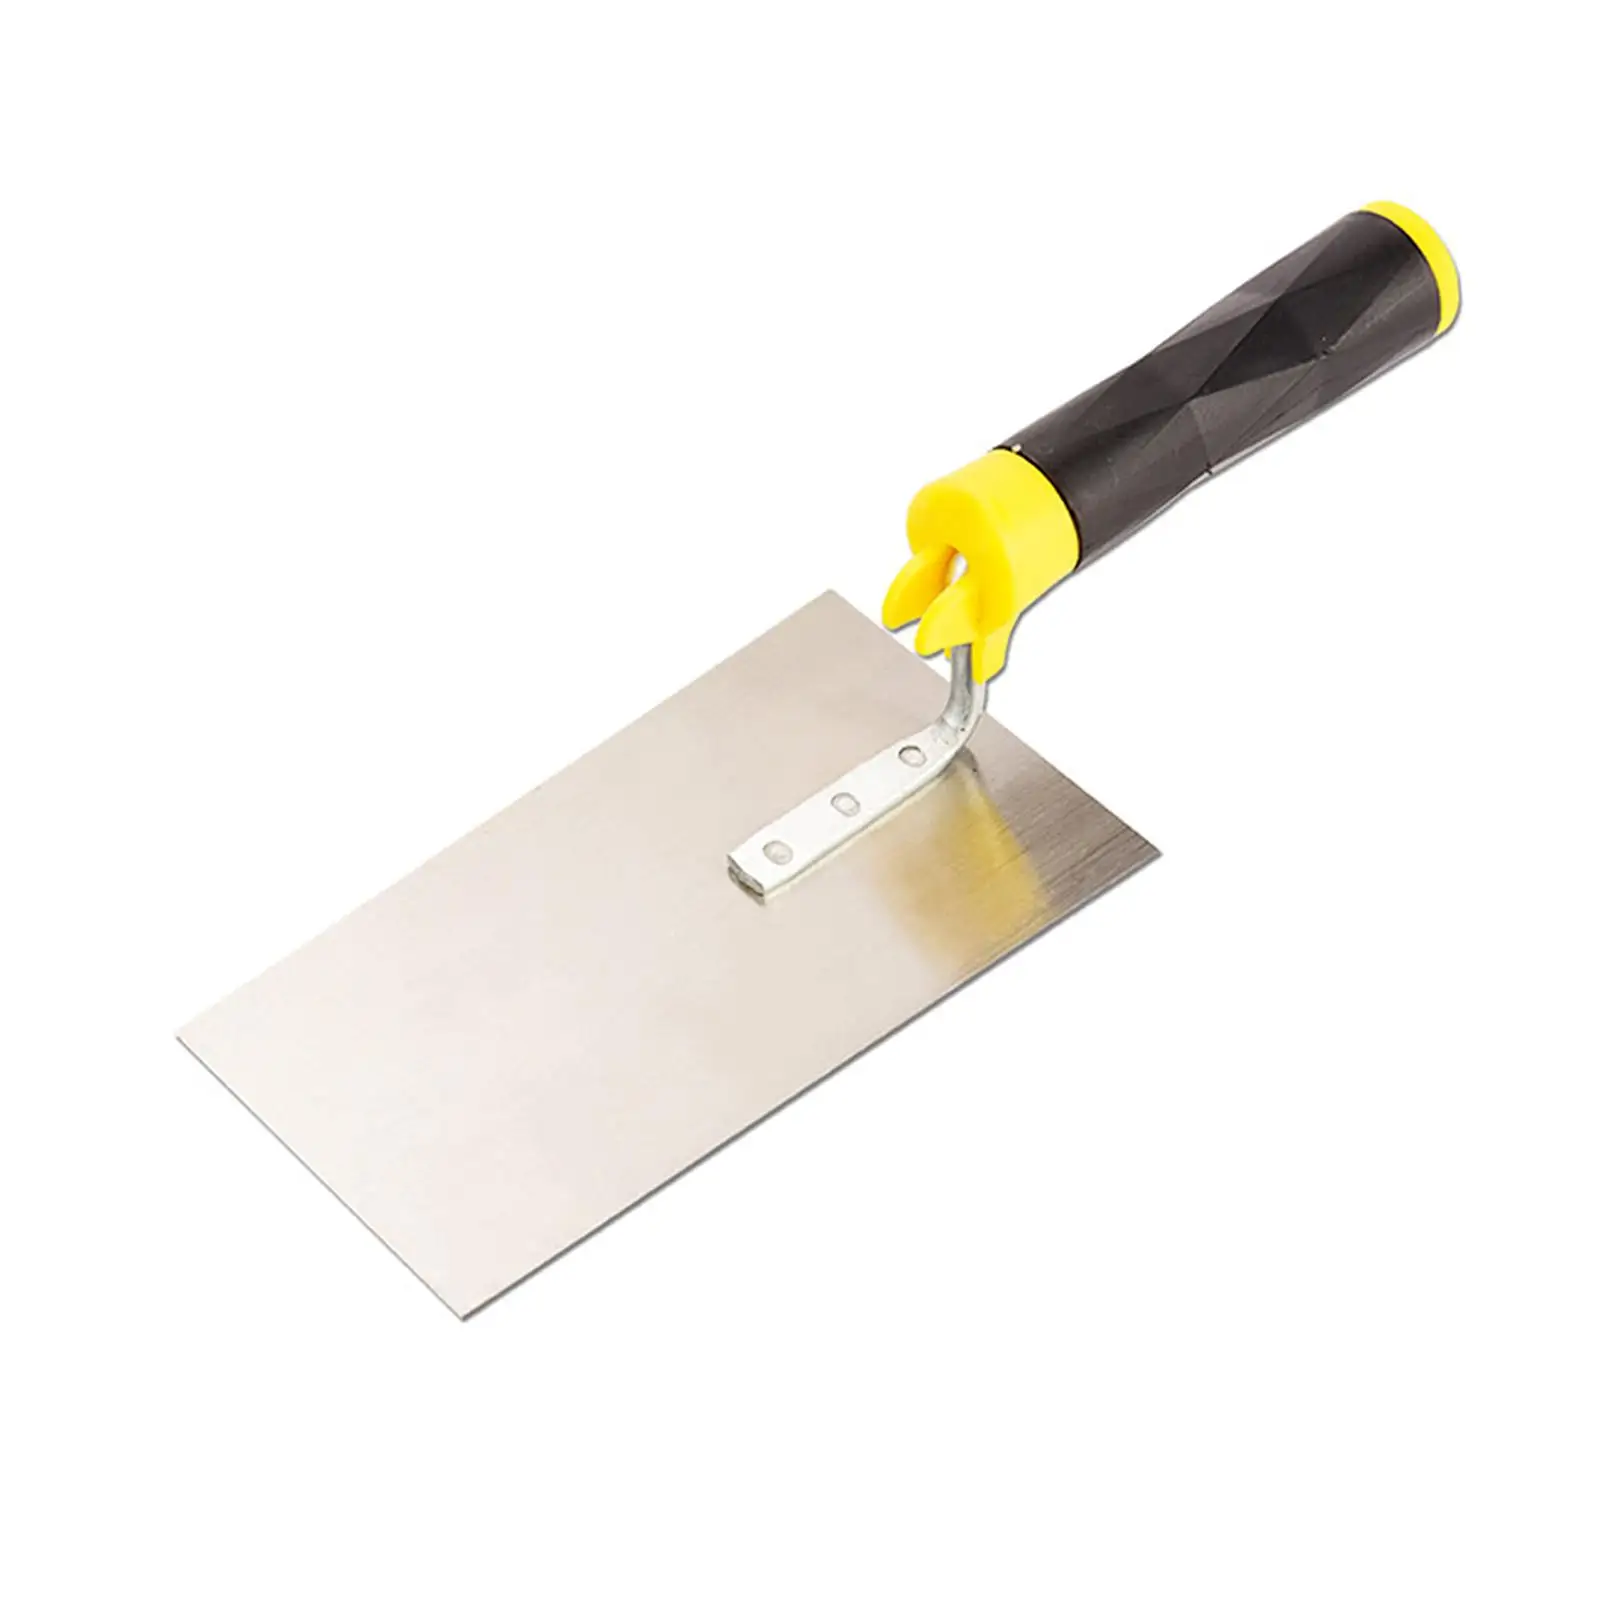 Wallpaper Scraper Spackle Knife Tool Multipurpose Filling Spatula for Adhesive Decals Applying Putty Wood Wallpaper Plaster